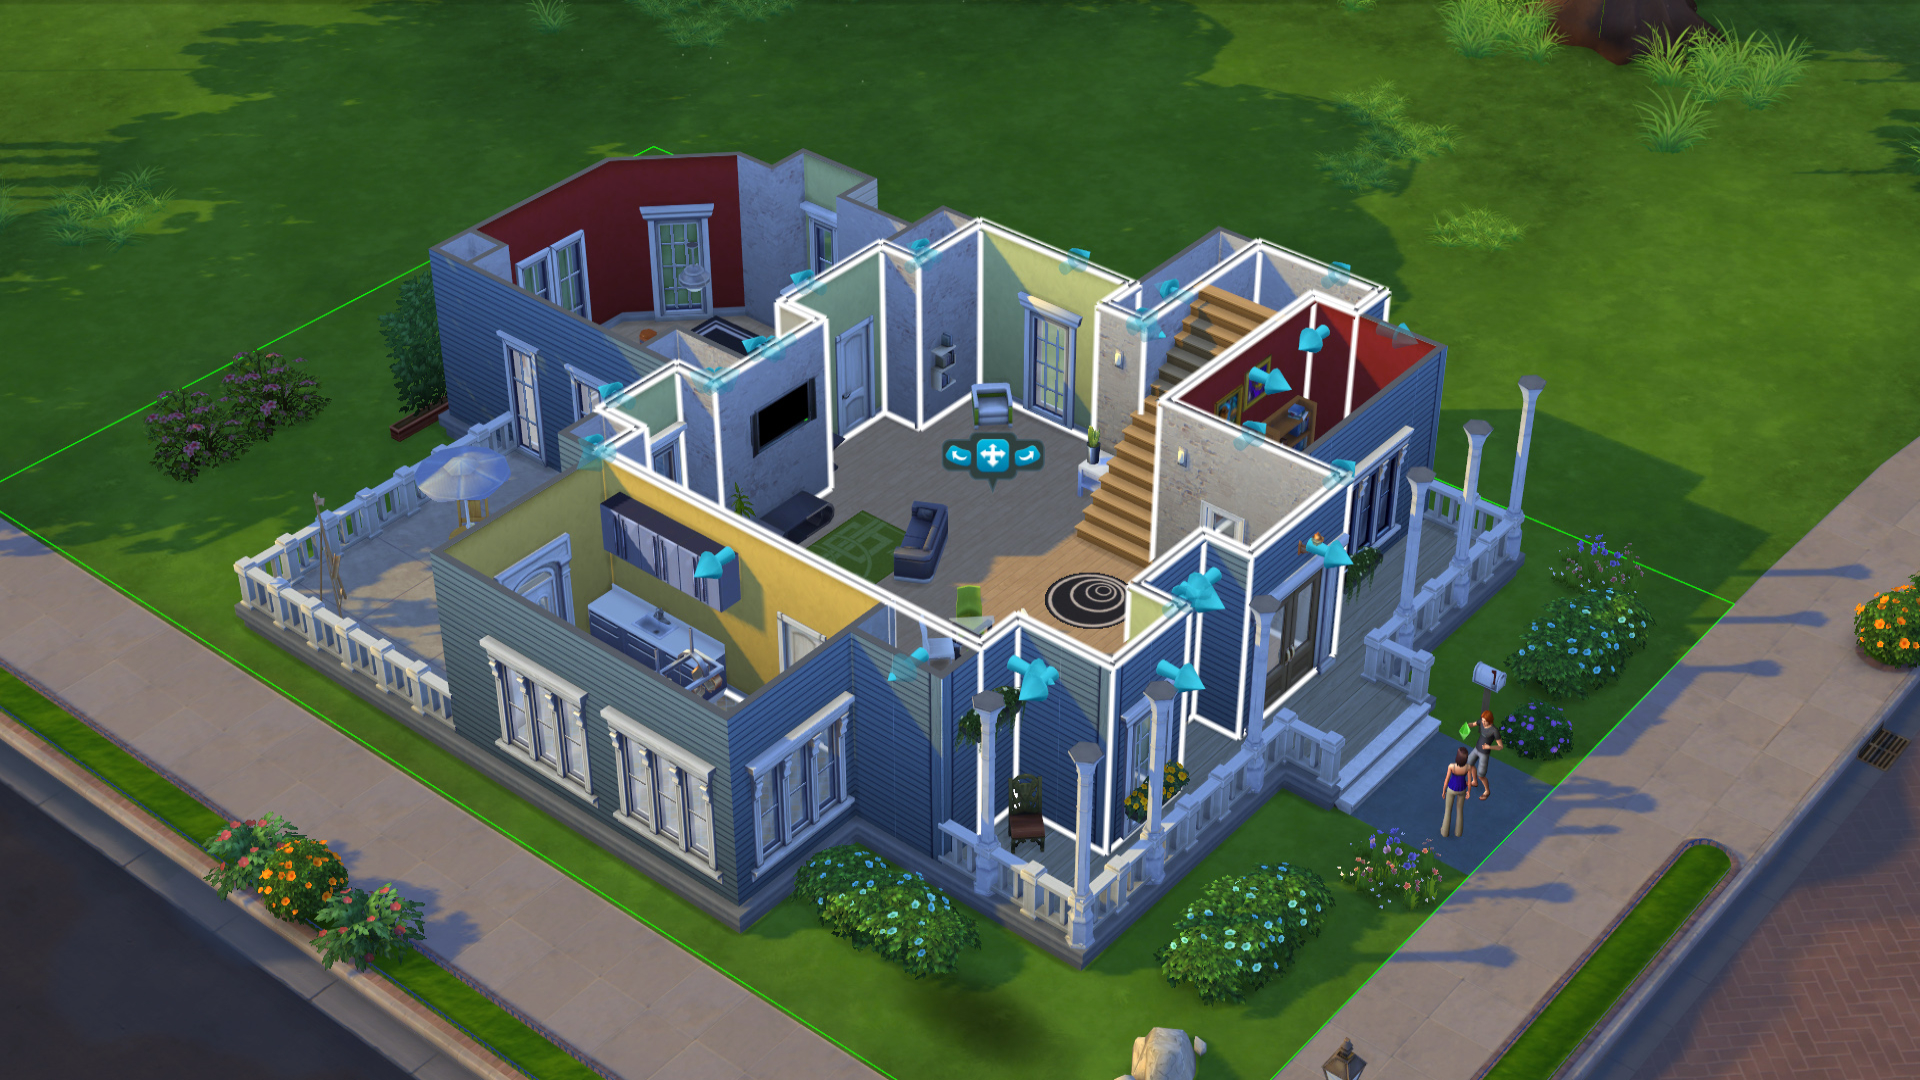 How to build a sim house